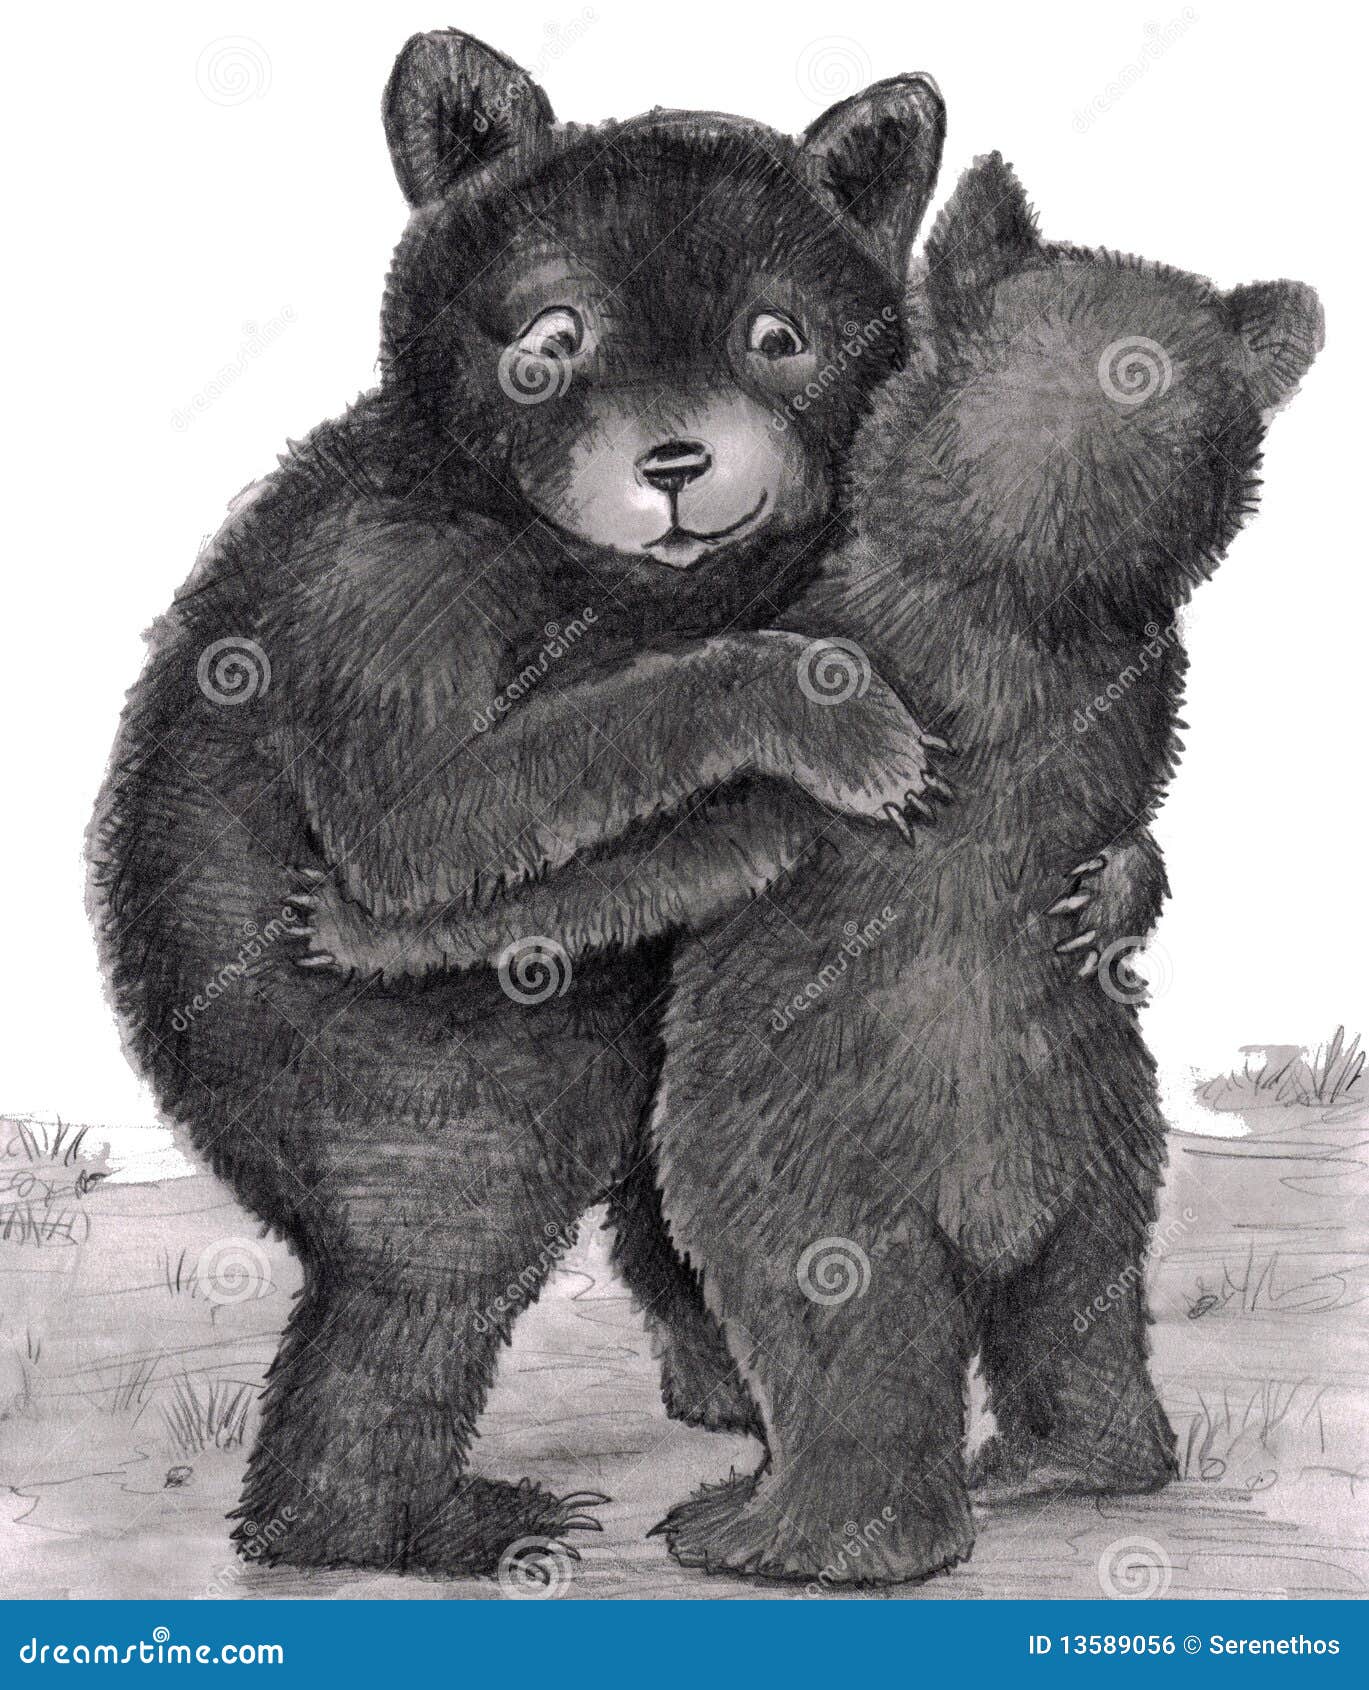 bear hug clip art